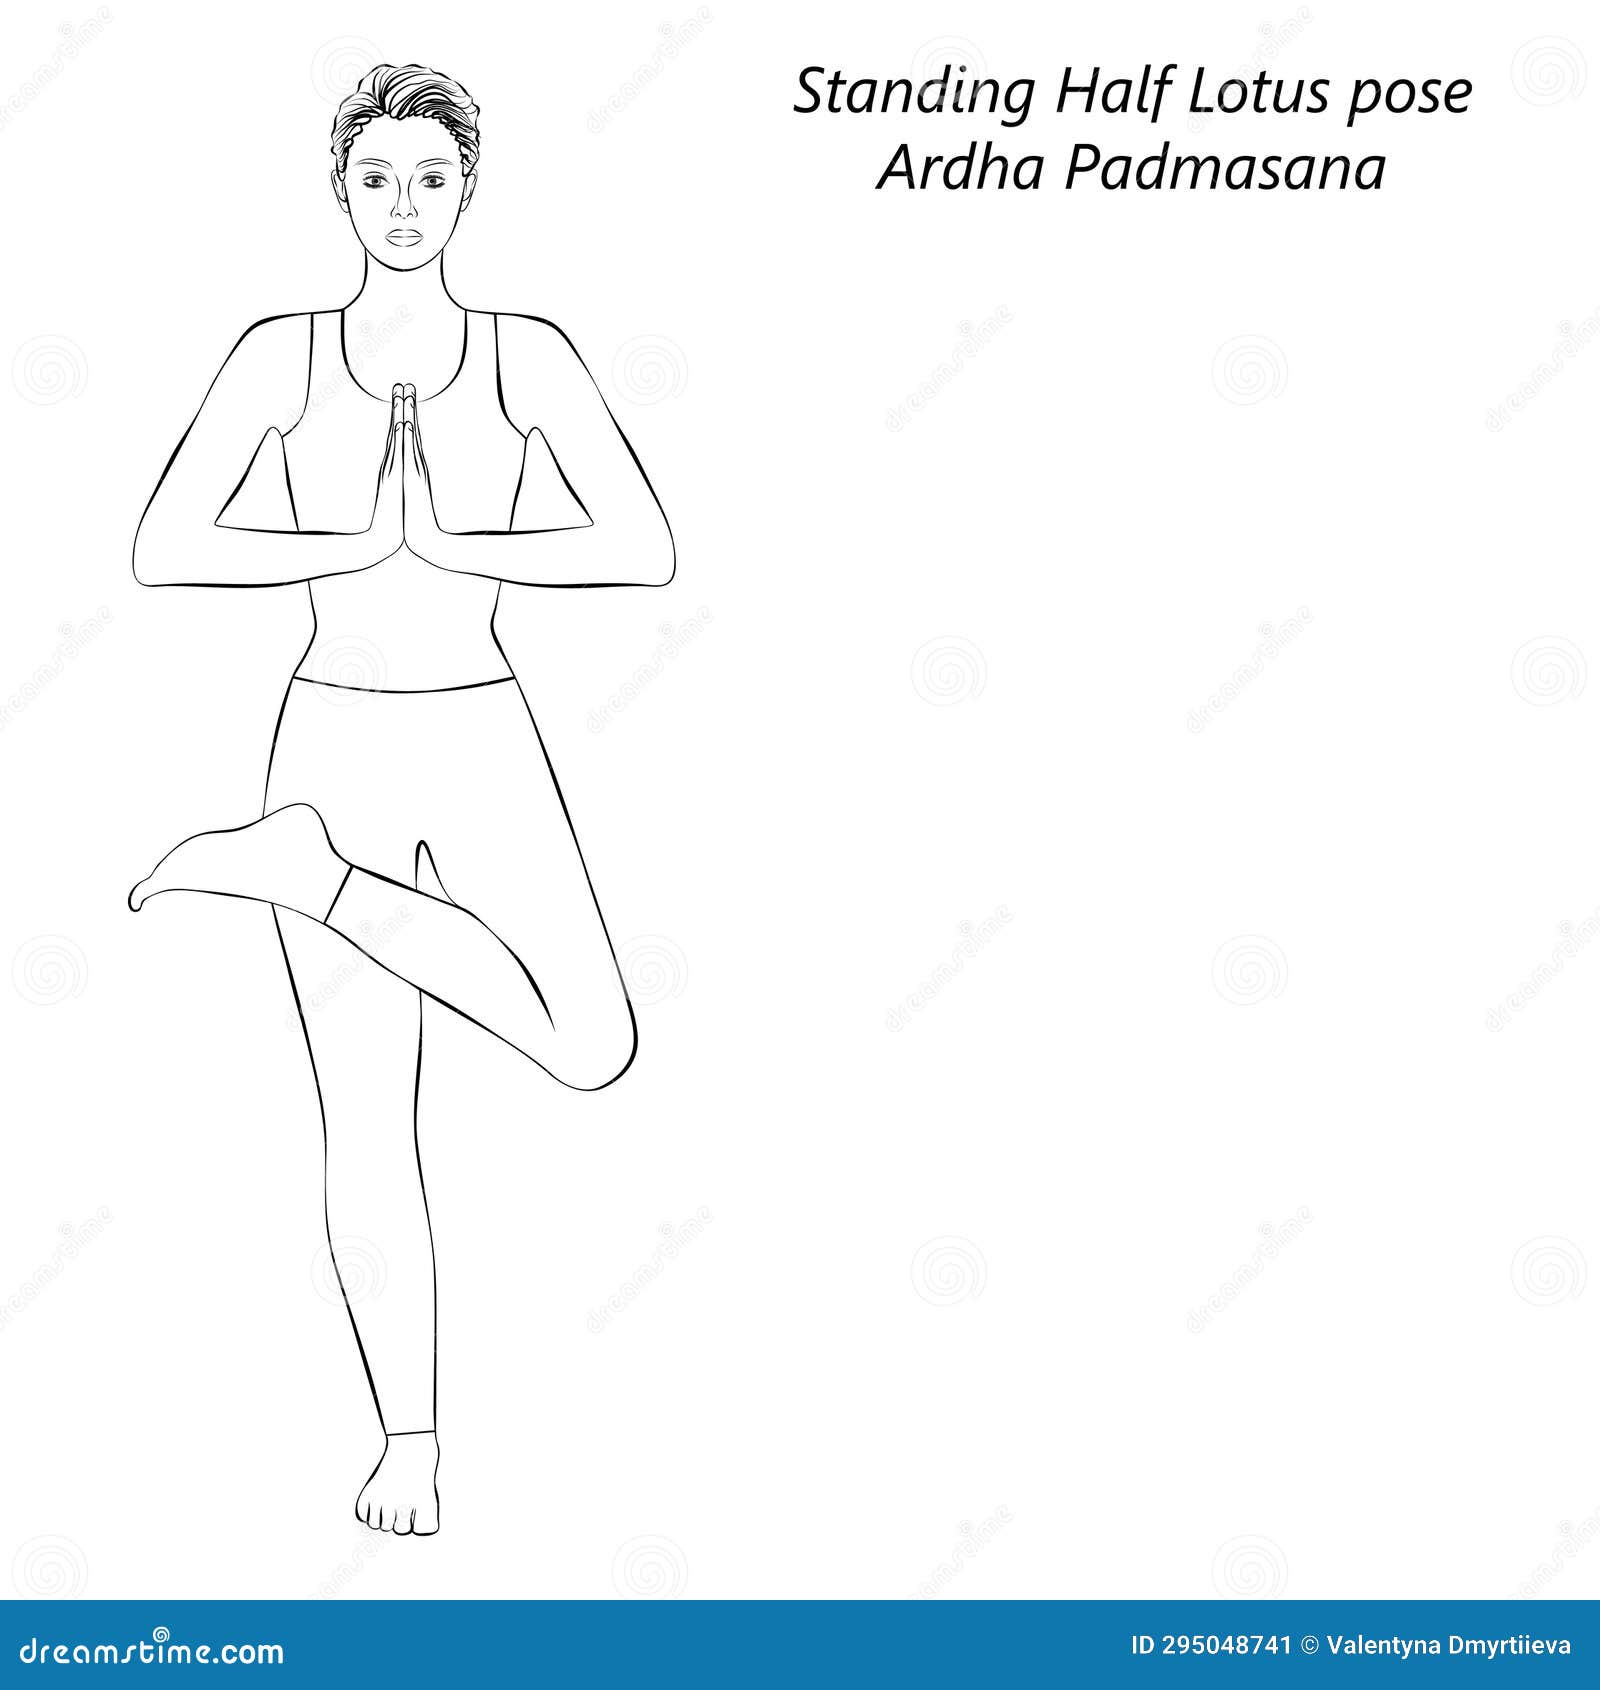 Yoga Pose - Pencil and Pen Drawing | Yoga drawing, Drawings, Nature sketch